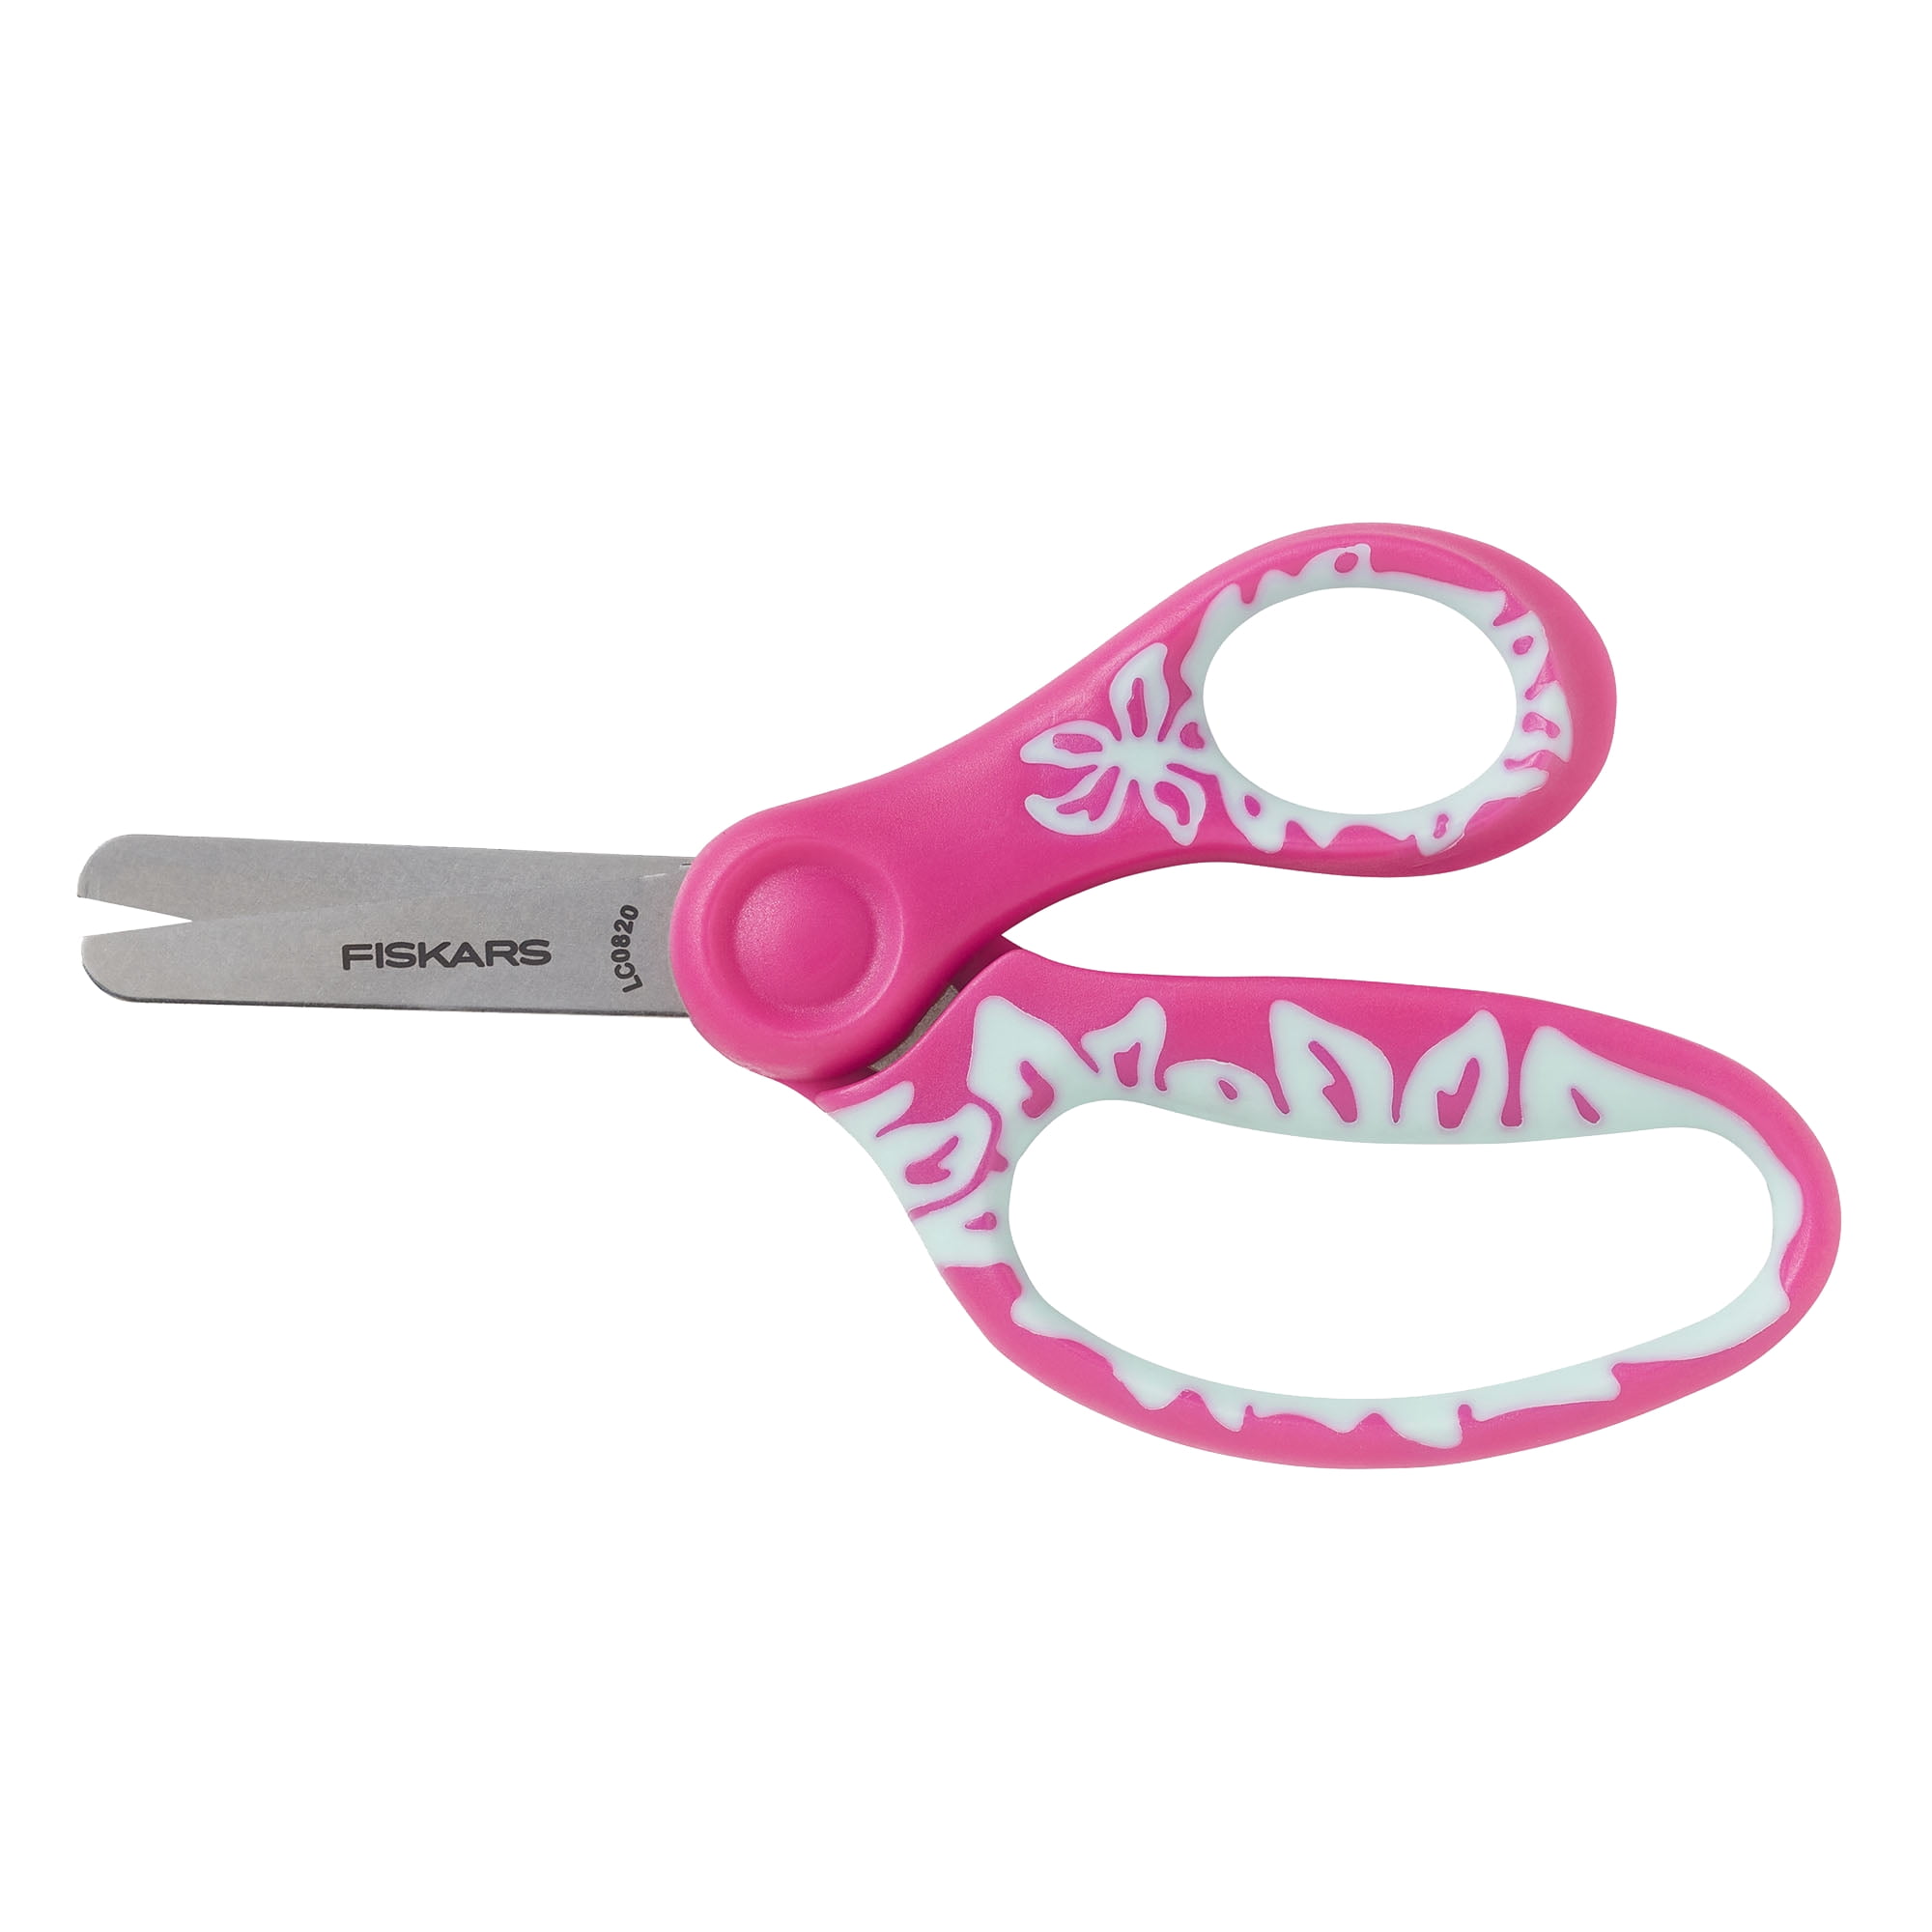 Soft Grip Handle Scissors - Black/Hot Pink - Set of 4 - Rapesco